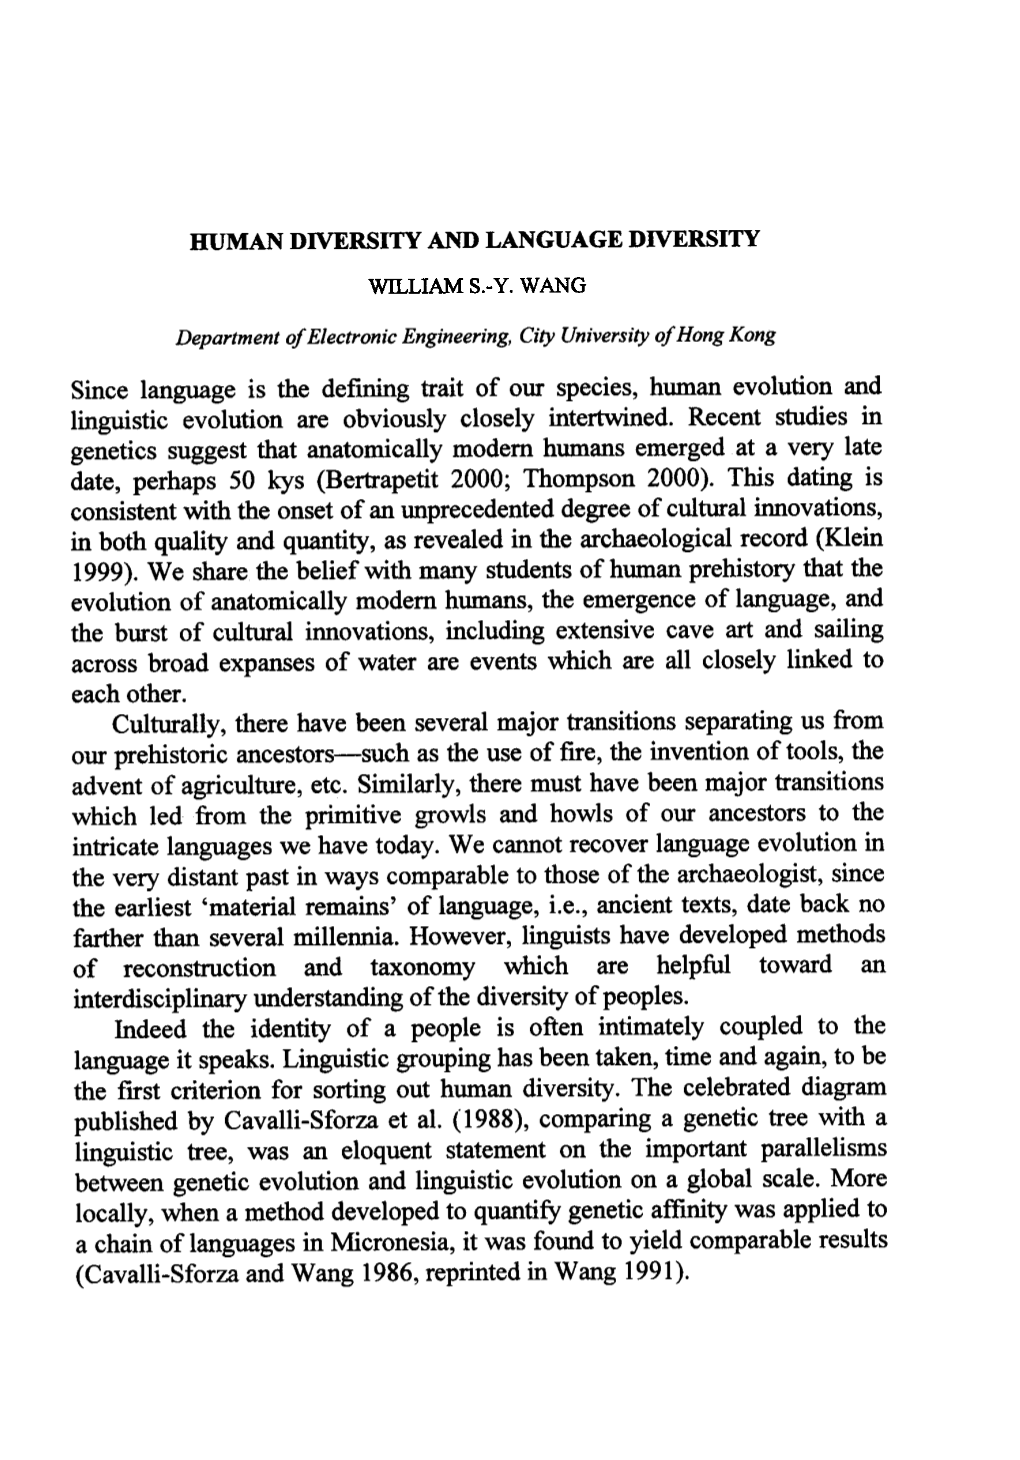 Wang, W. S-Y. (2001). Human Diversity and Language Diversity